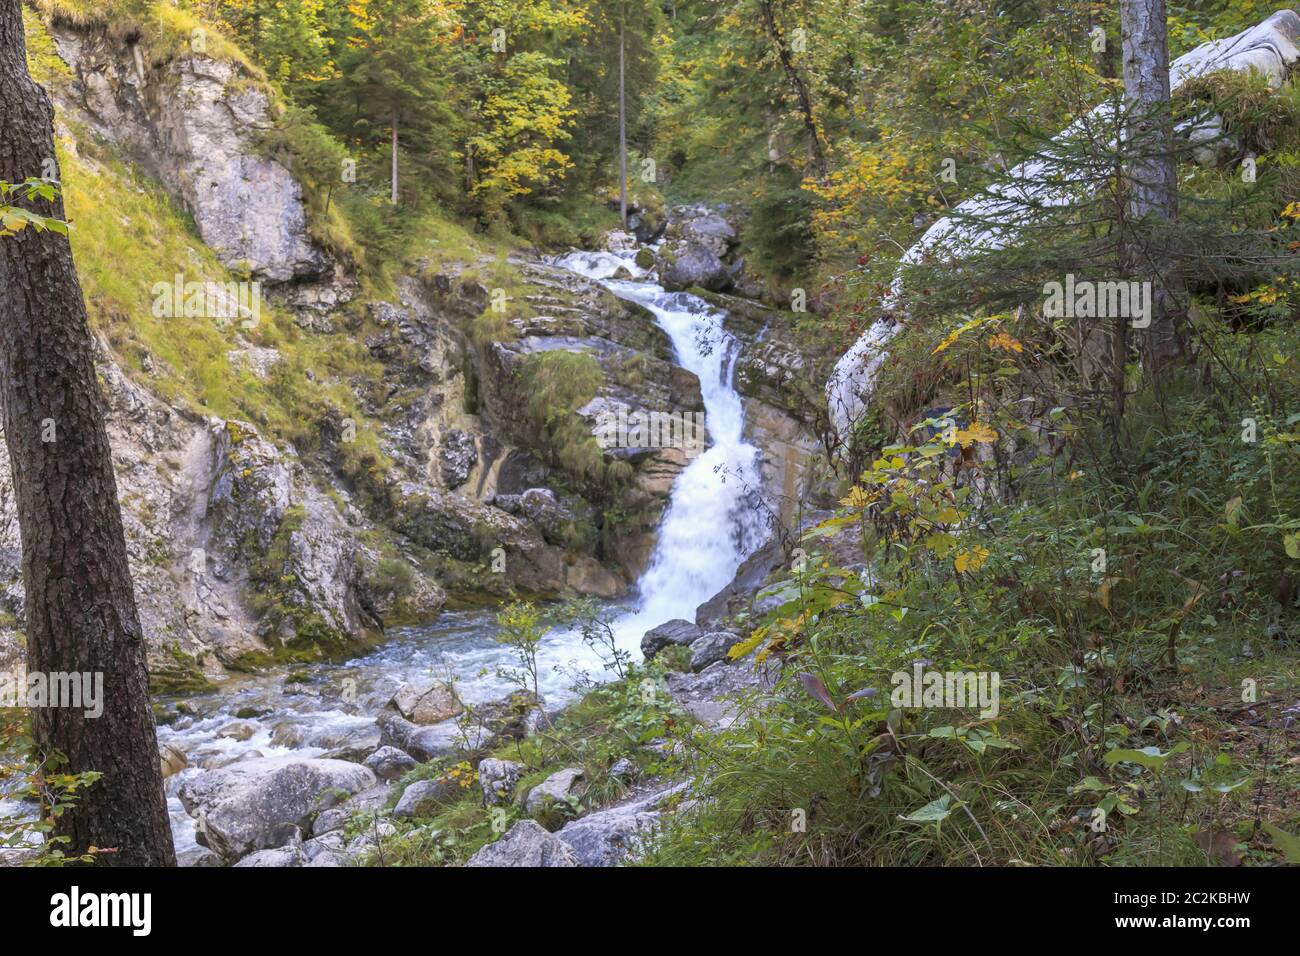 Kuhflucht waterfalls in Ester mountains, autumn, Bavaria, Germany Stock Photo